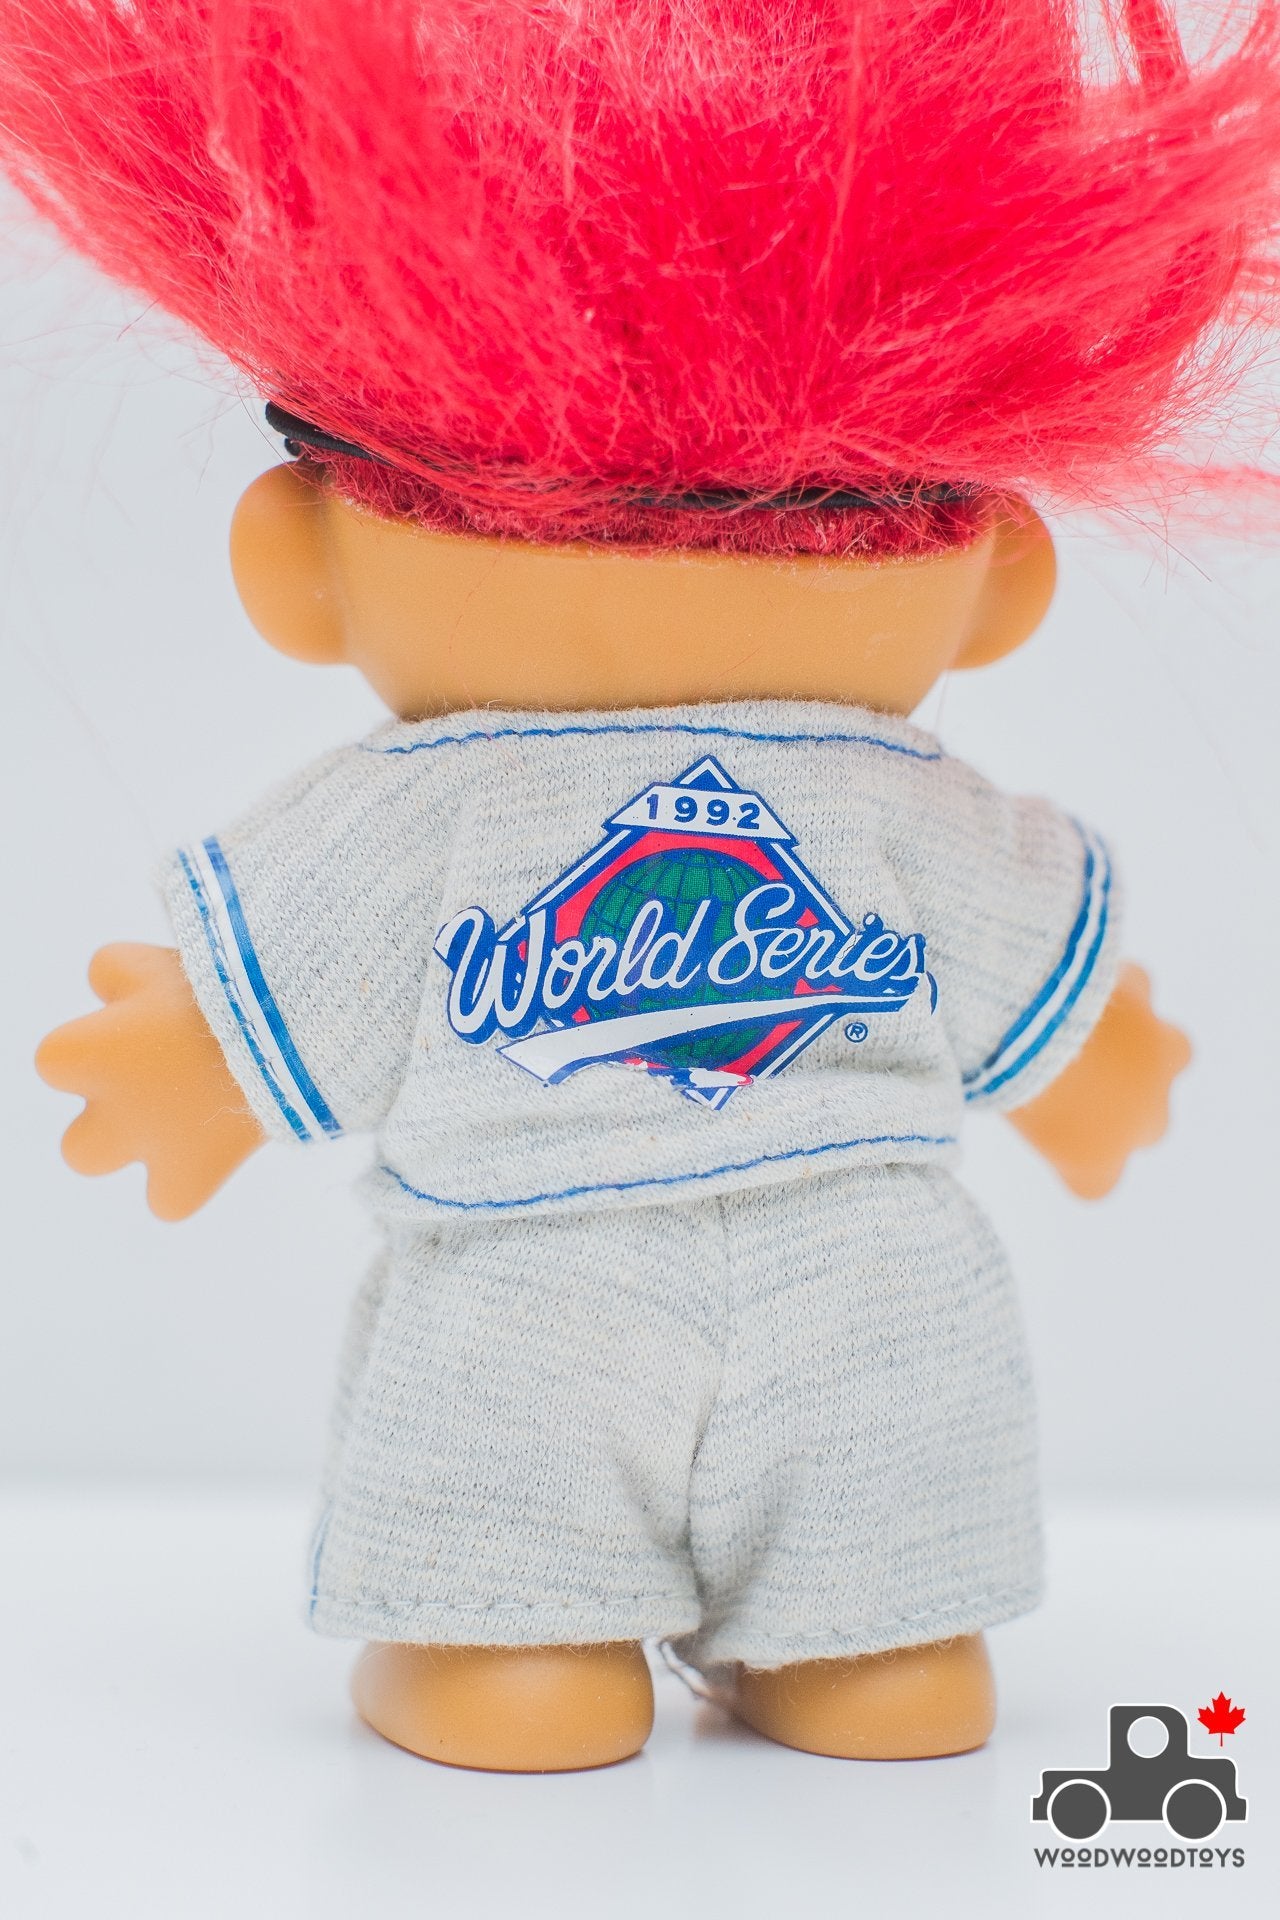 Vintage 1992 Toronto Blue Jays World Series Troll Dolls - Wood Wood Toys Canada's Favourite Montessori Toy Store